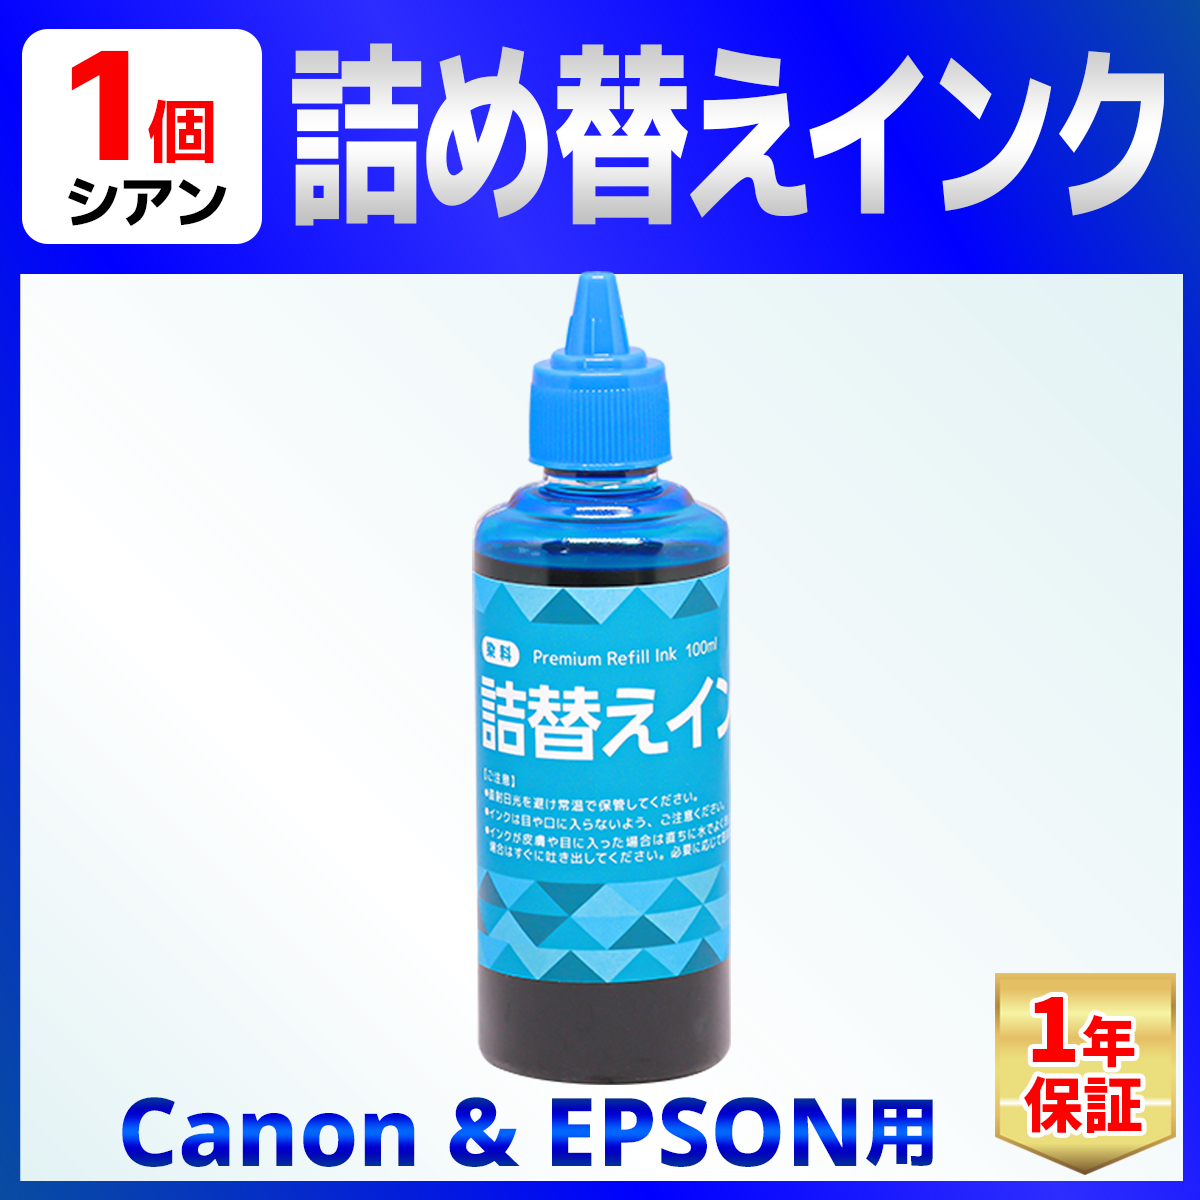 CANON/EPSON用 詰め替え インク ユニバーサルインク 100ml 染料 シアン